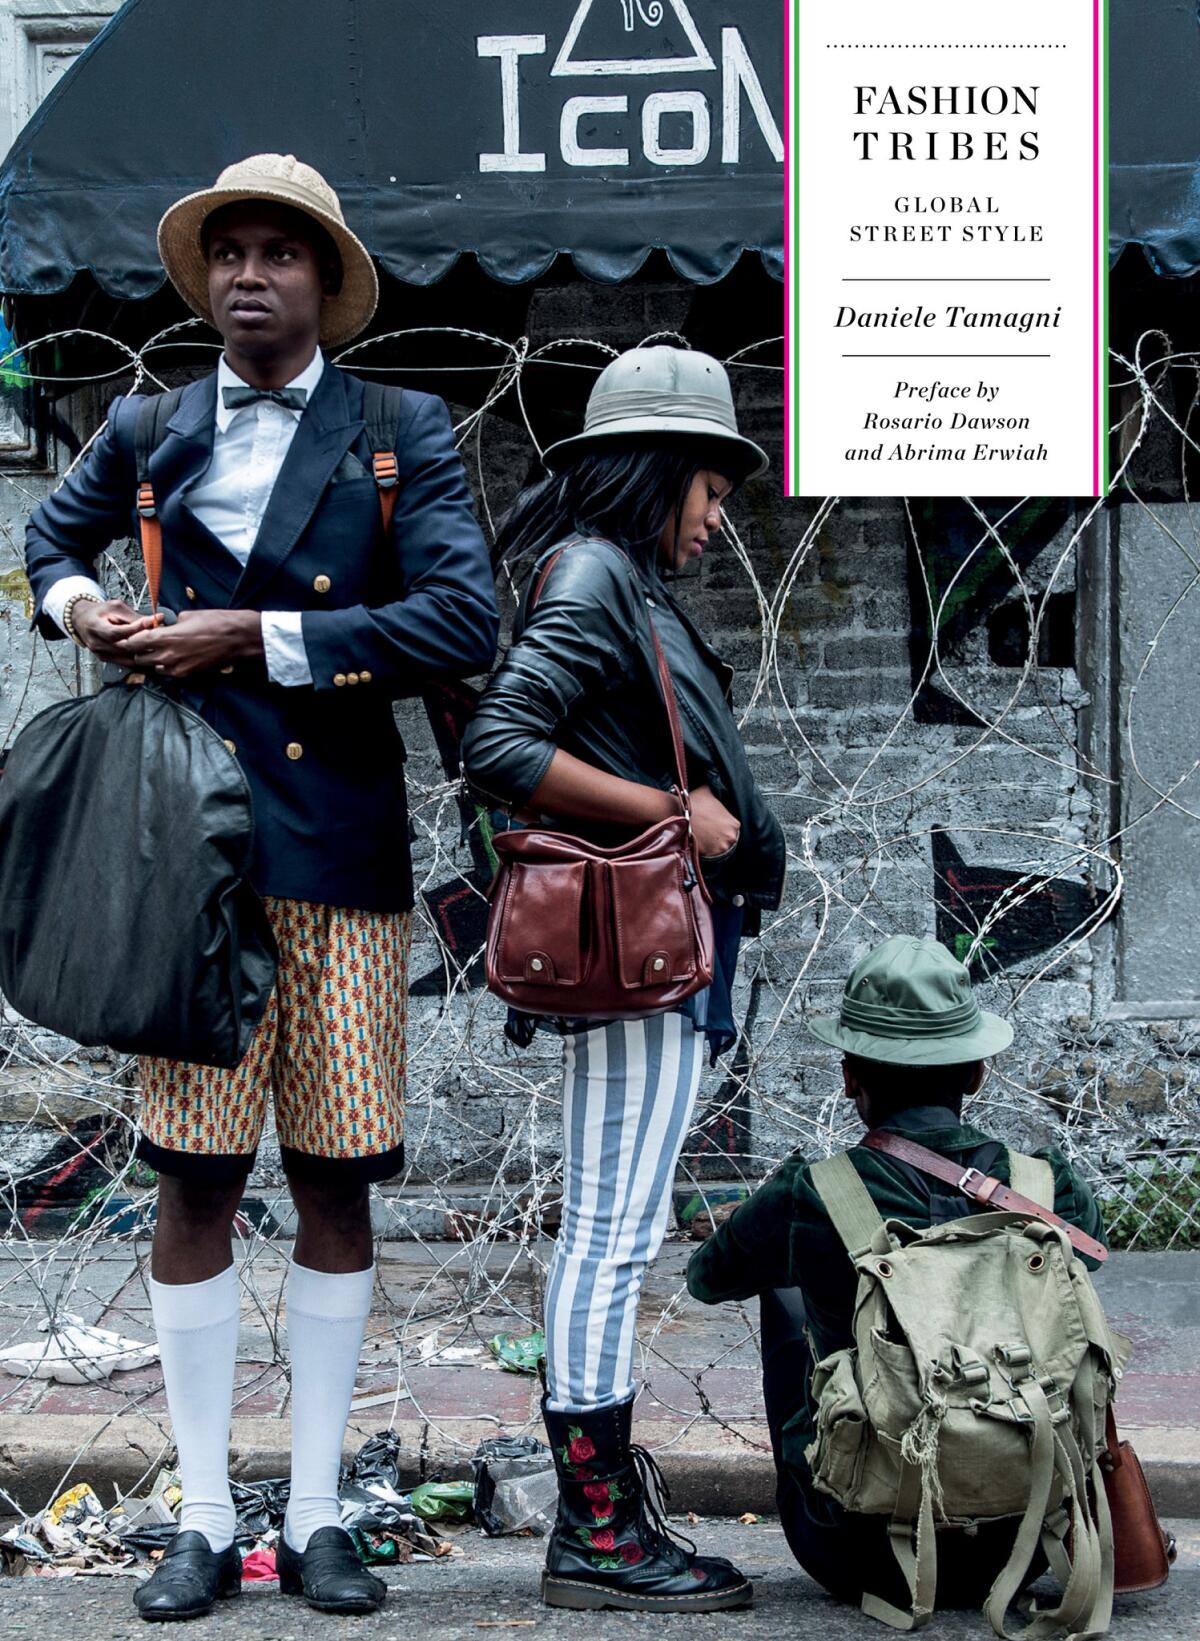 "Fashion Tribes: Global Street Style" by Daniele Tamagni